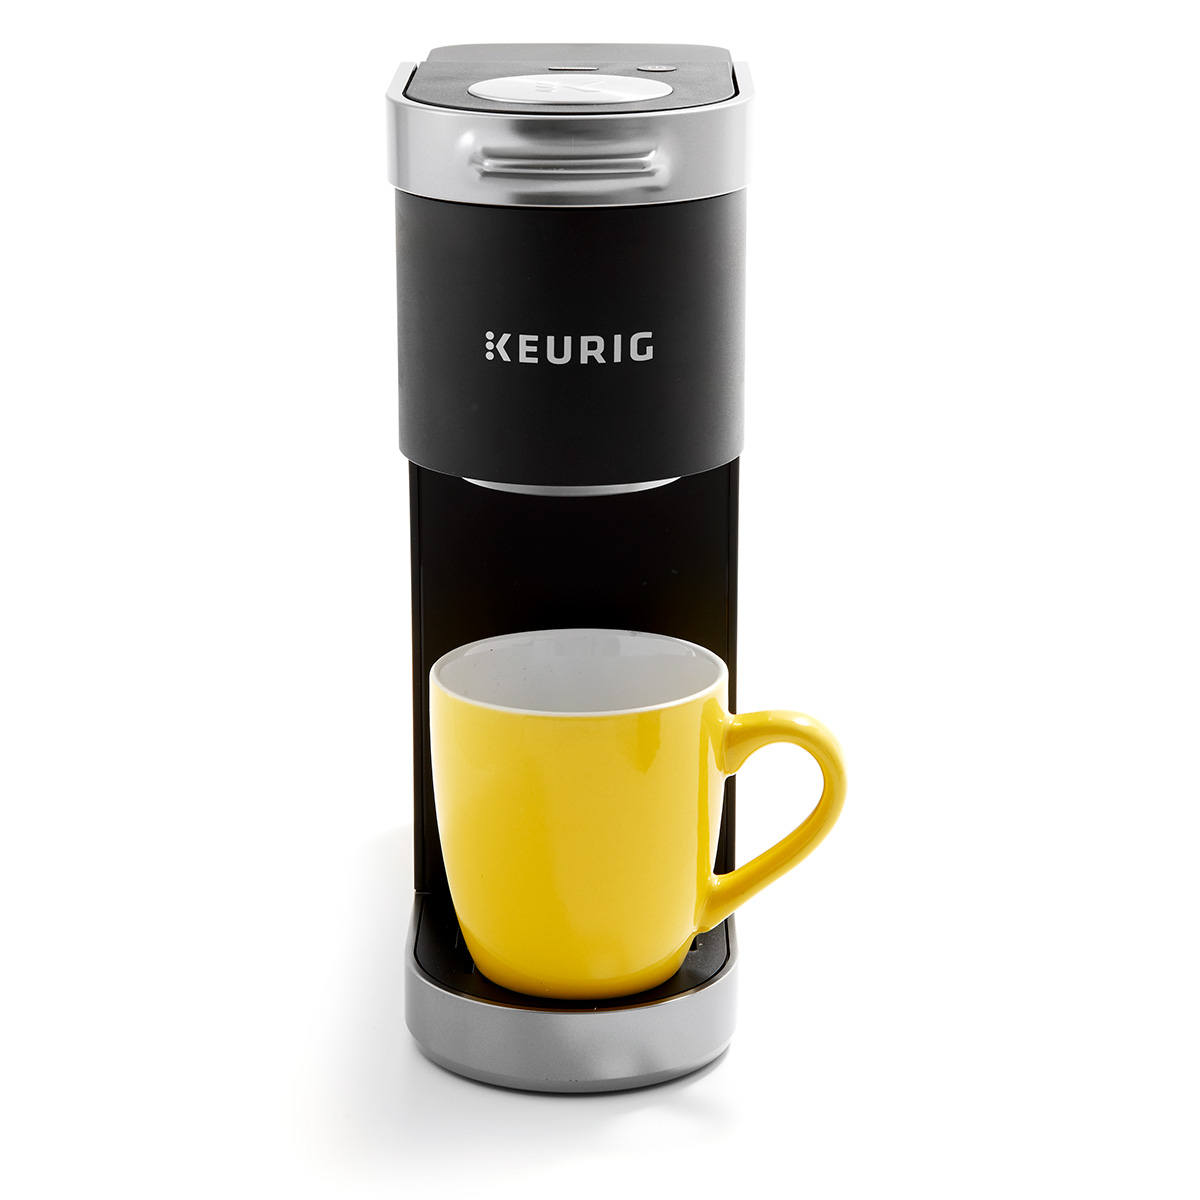 Keurig(R) K-Mini(tm) Plus Single Serve Coffee Maker